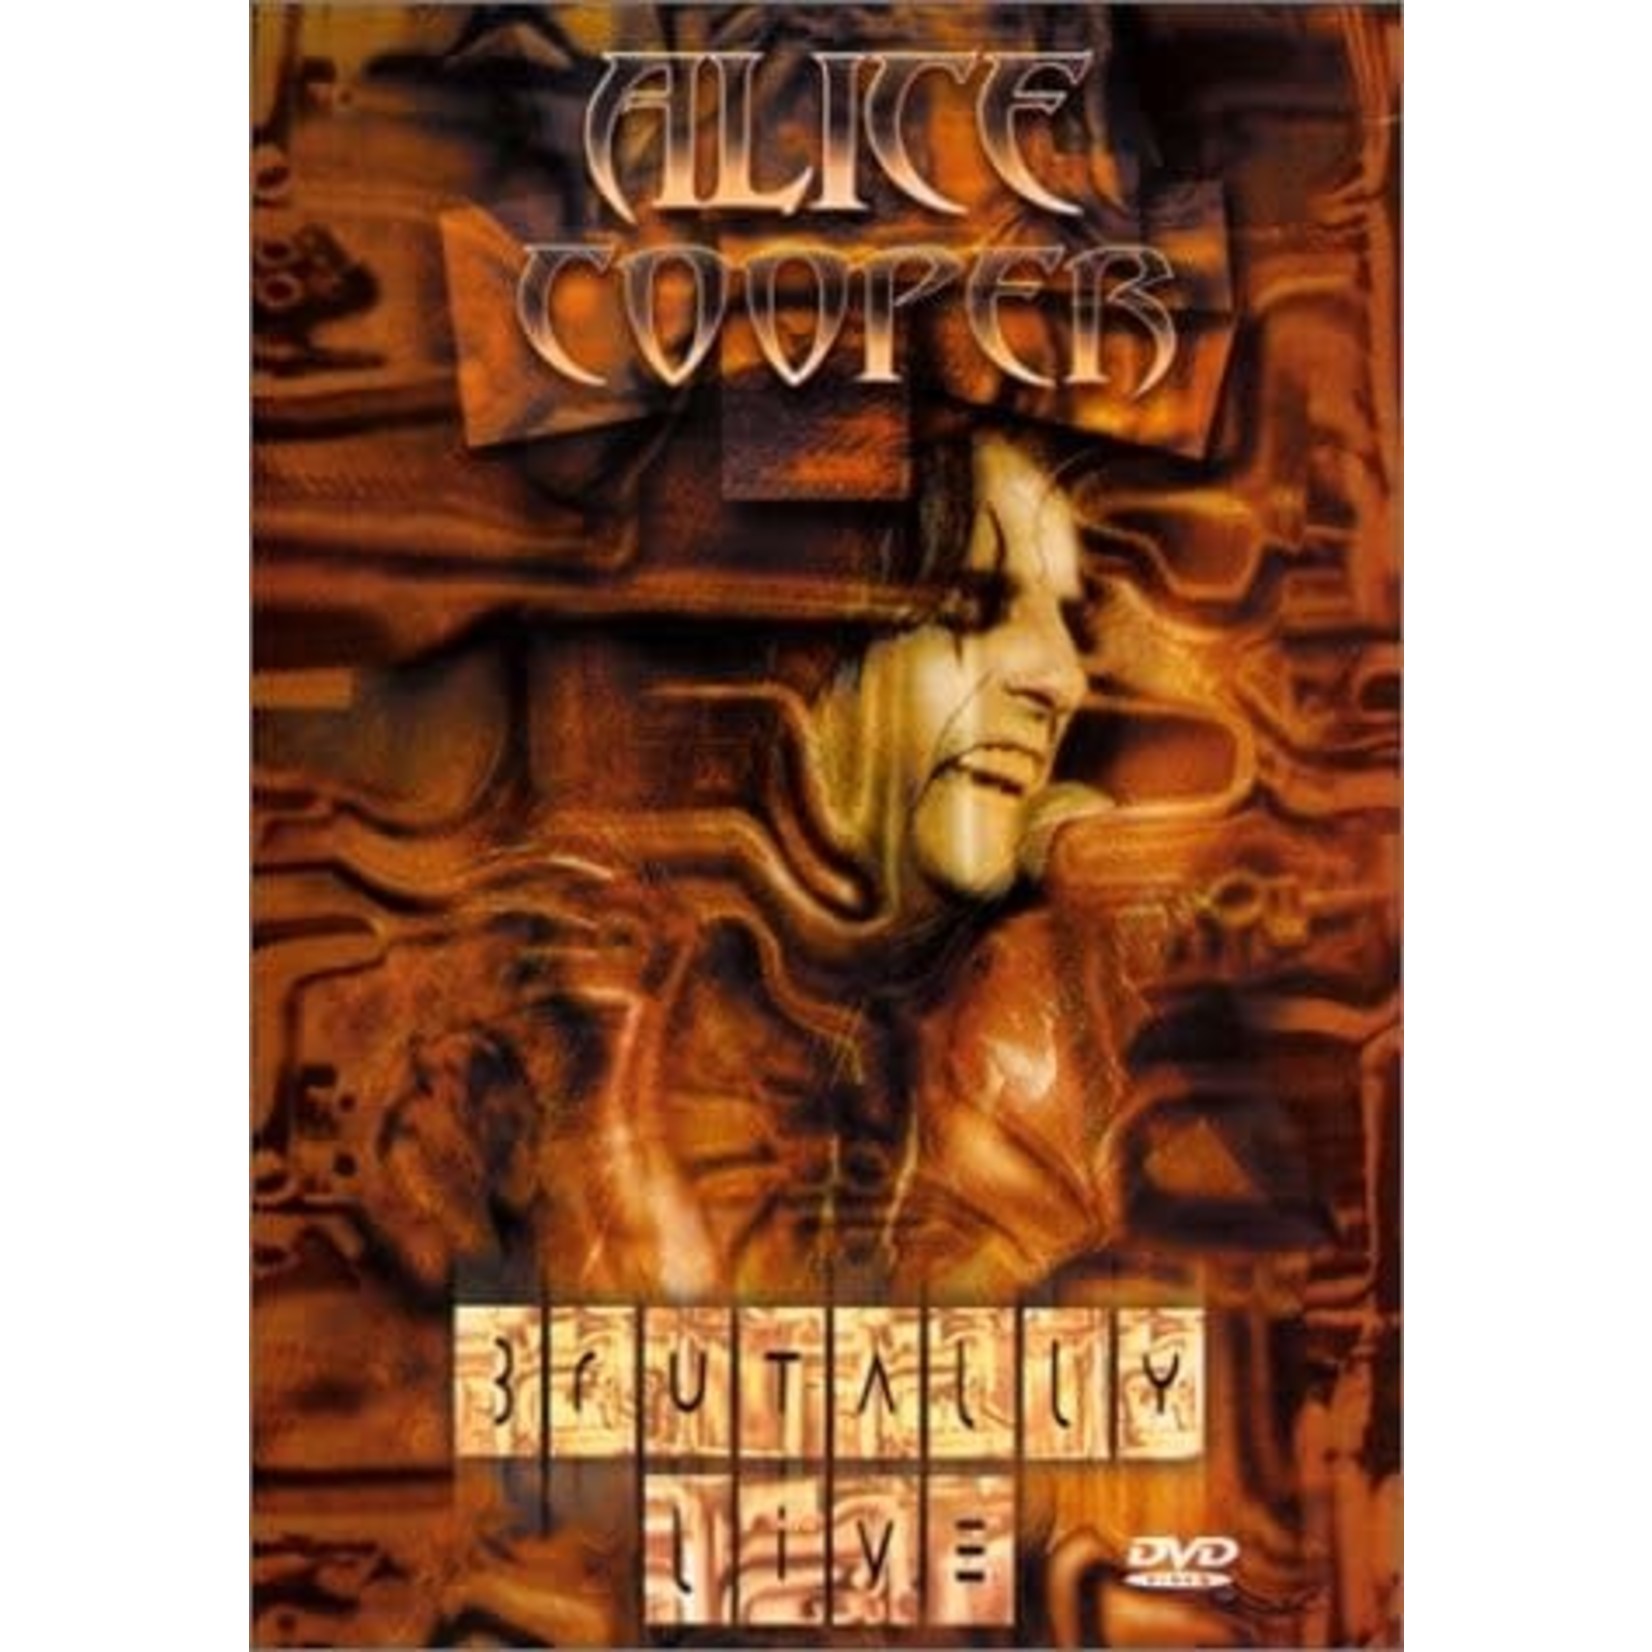 Alice Cooper - Brutally Live [USED DVD]